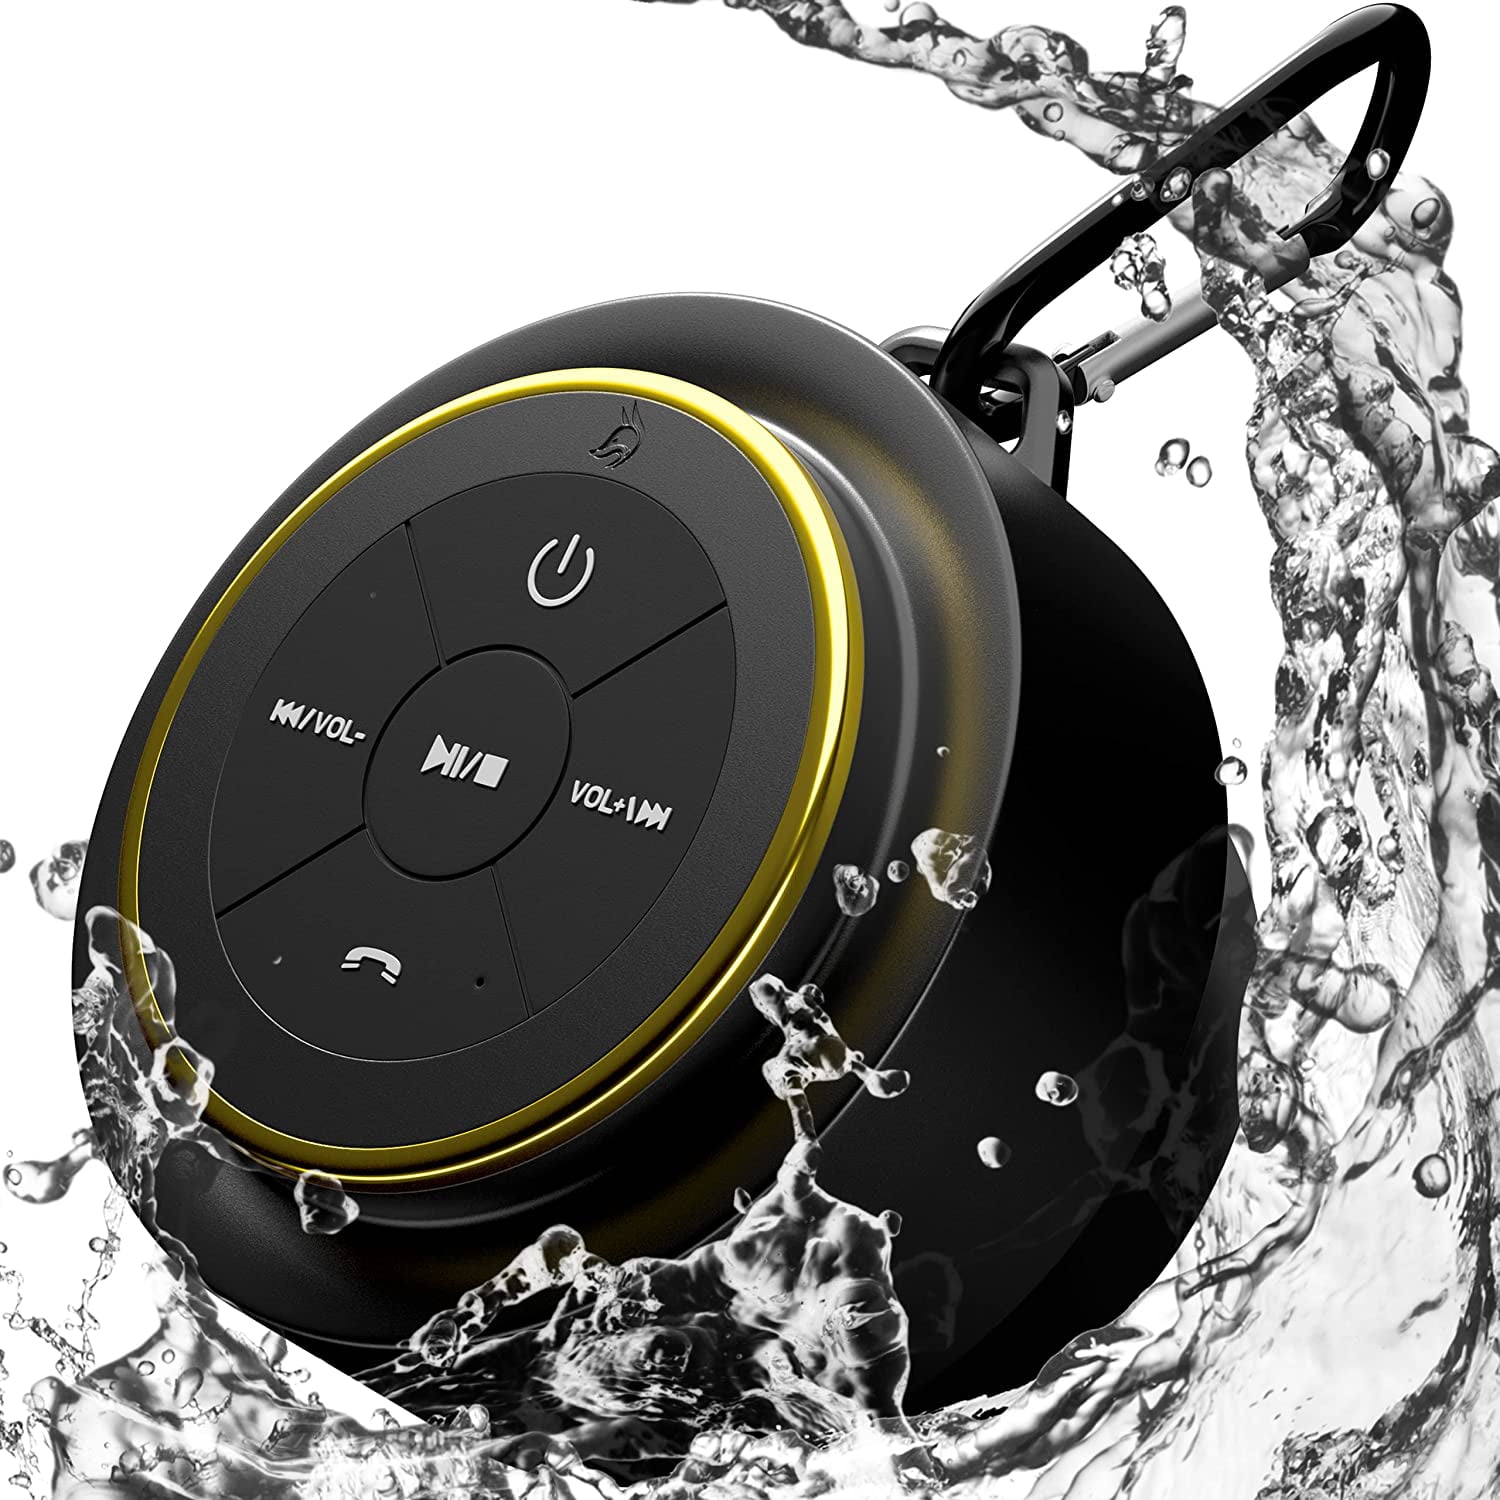 JBL Bluetooth Speaker Portable Waterproof 3 Boombox (Black)